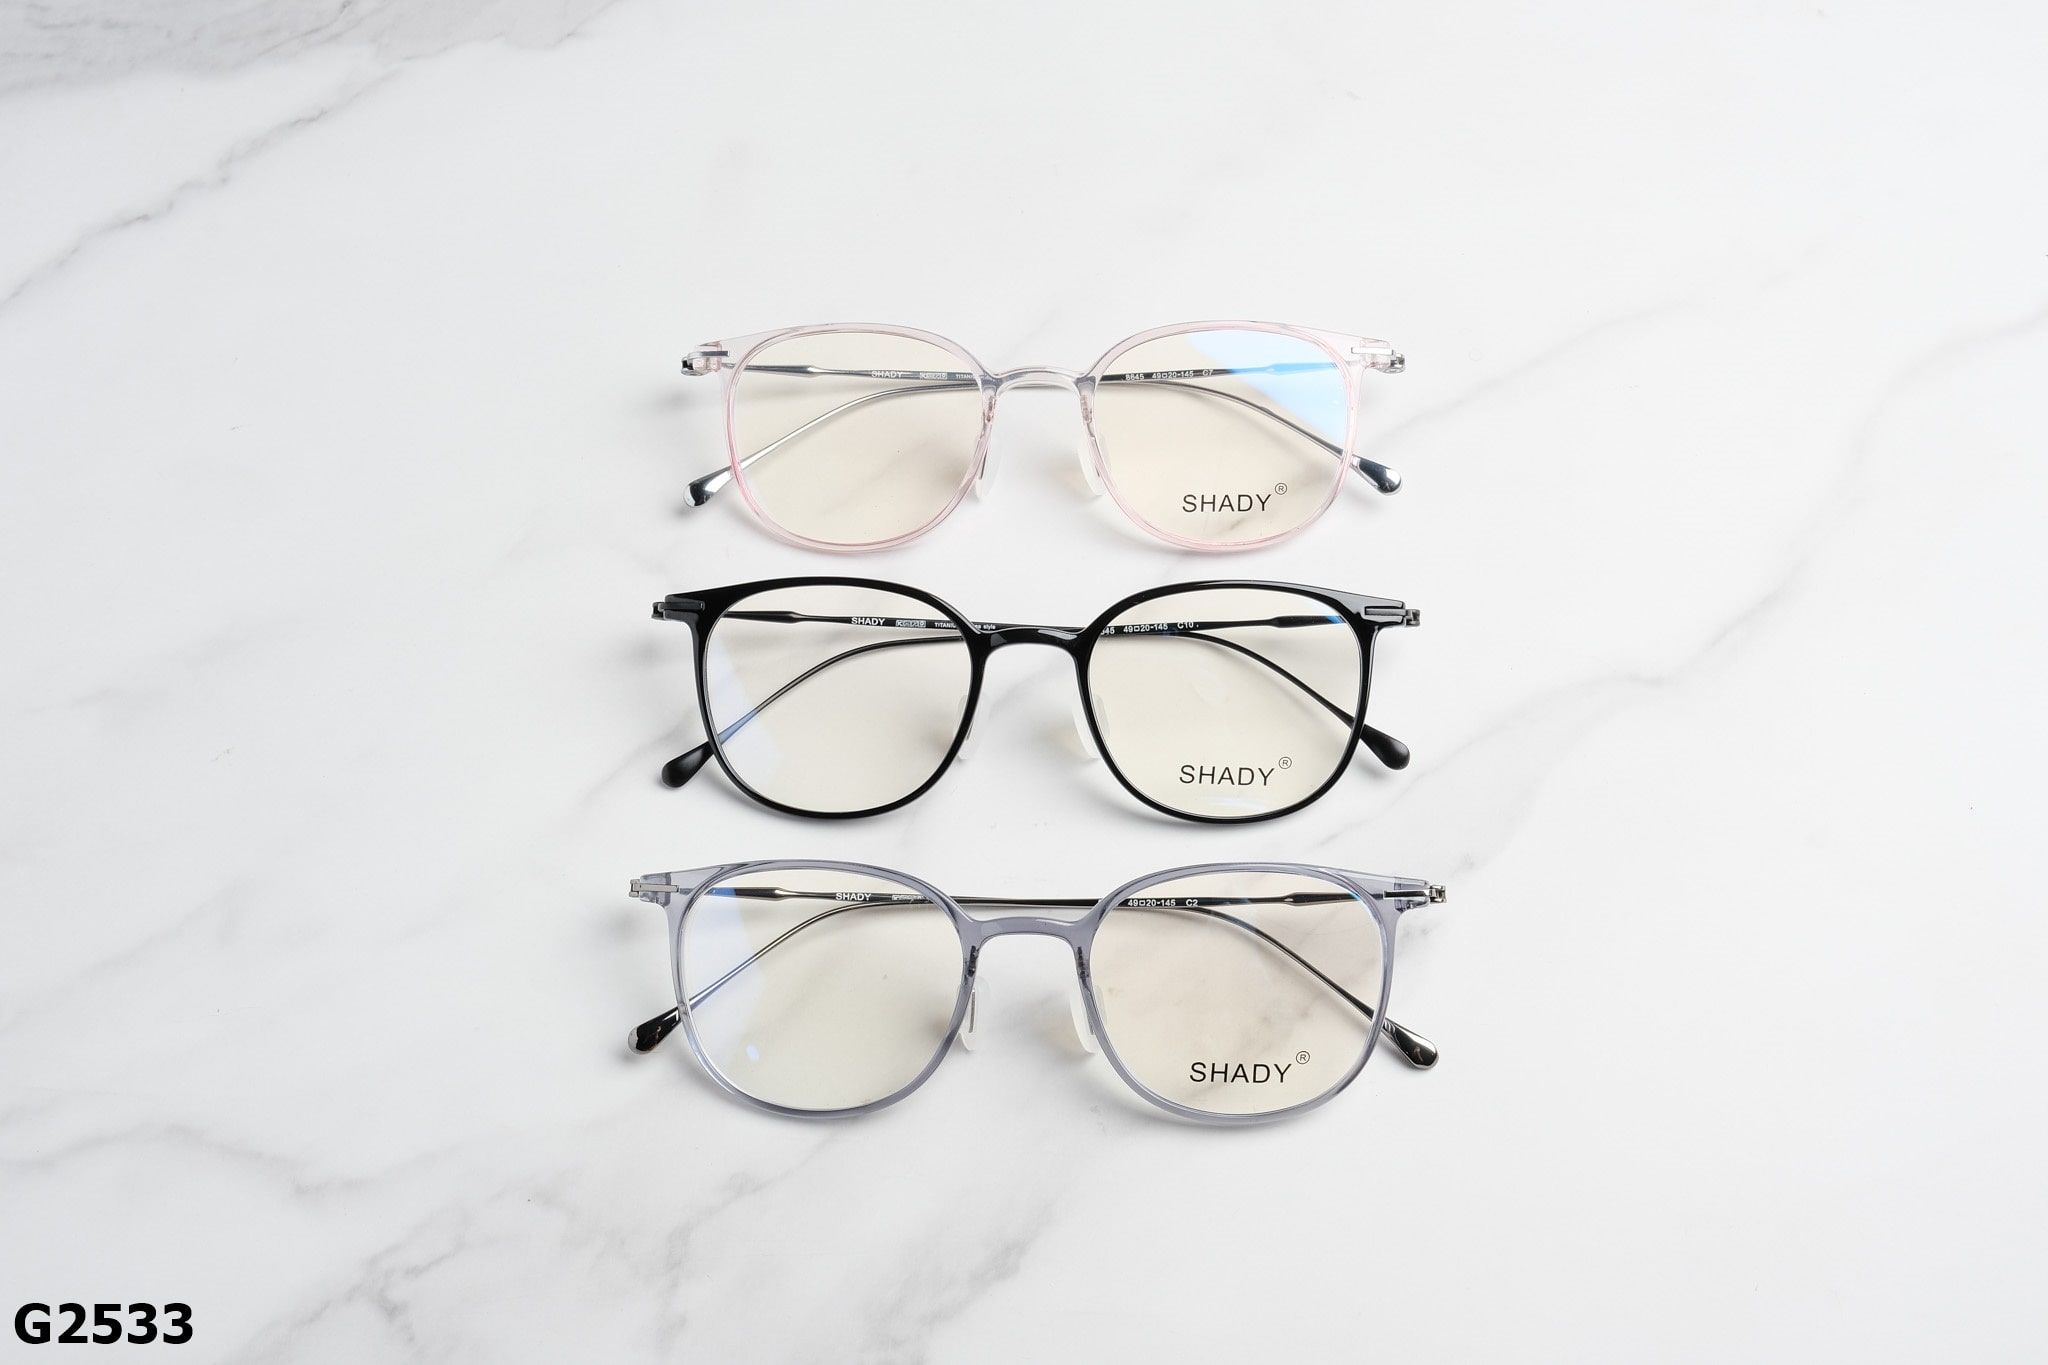  SHADY Eyewear - Glasses - G2533 